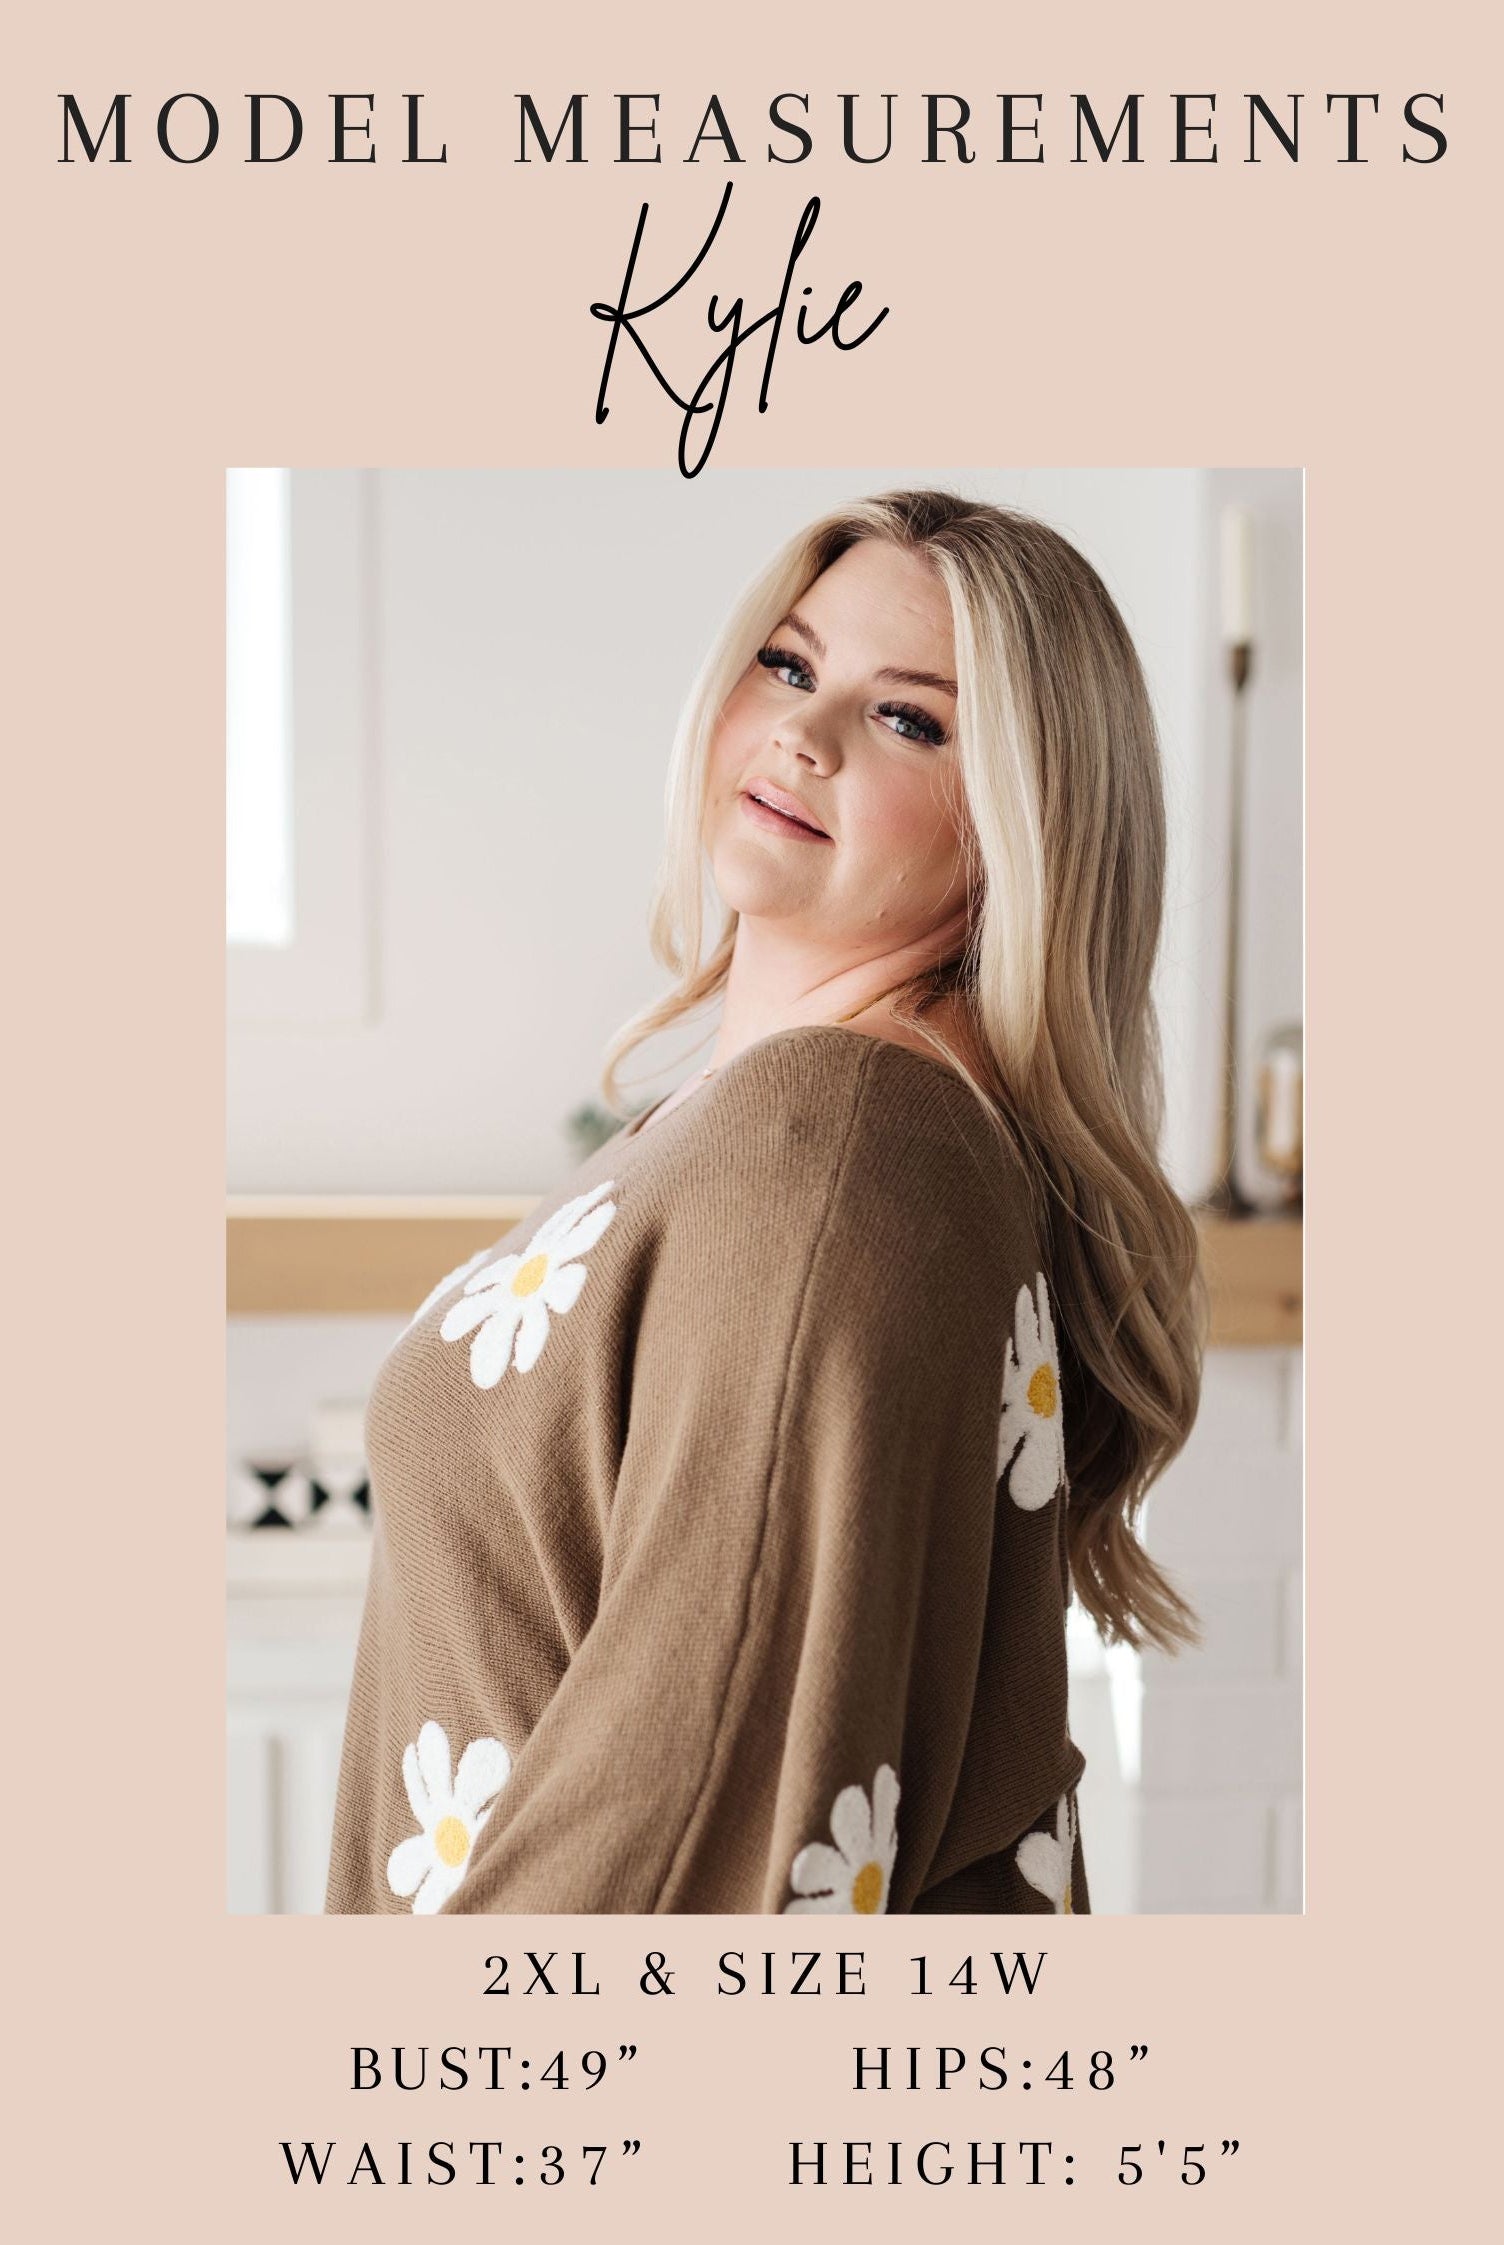 Cozy in Cheetah Pullover Sweatshirt-Sweatshirts-Krush Kandy, Women's Online Fashion Boutique Located in Phoenix, Arizona (Scottsdale Area)